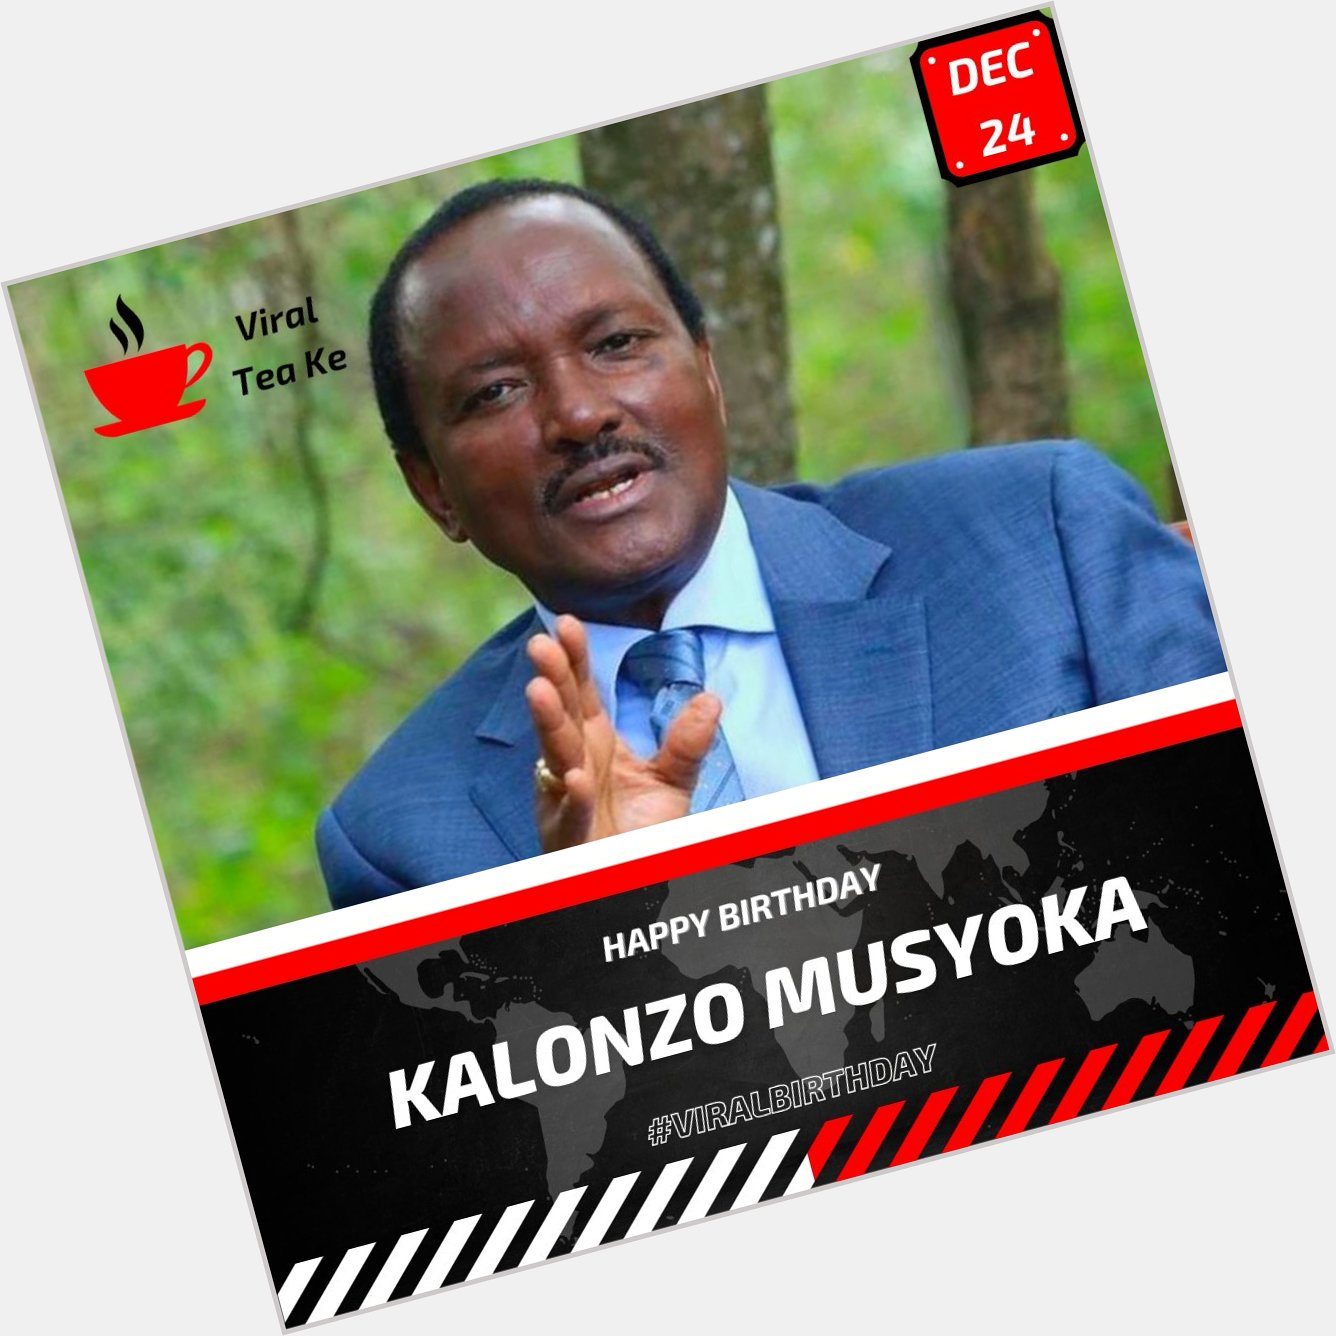 Wishing Kalonzo Musyoka a Happy Birthday and many more years ahead  